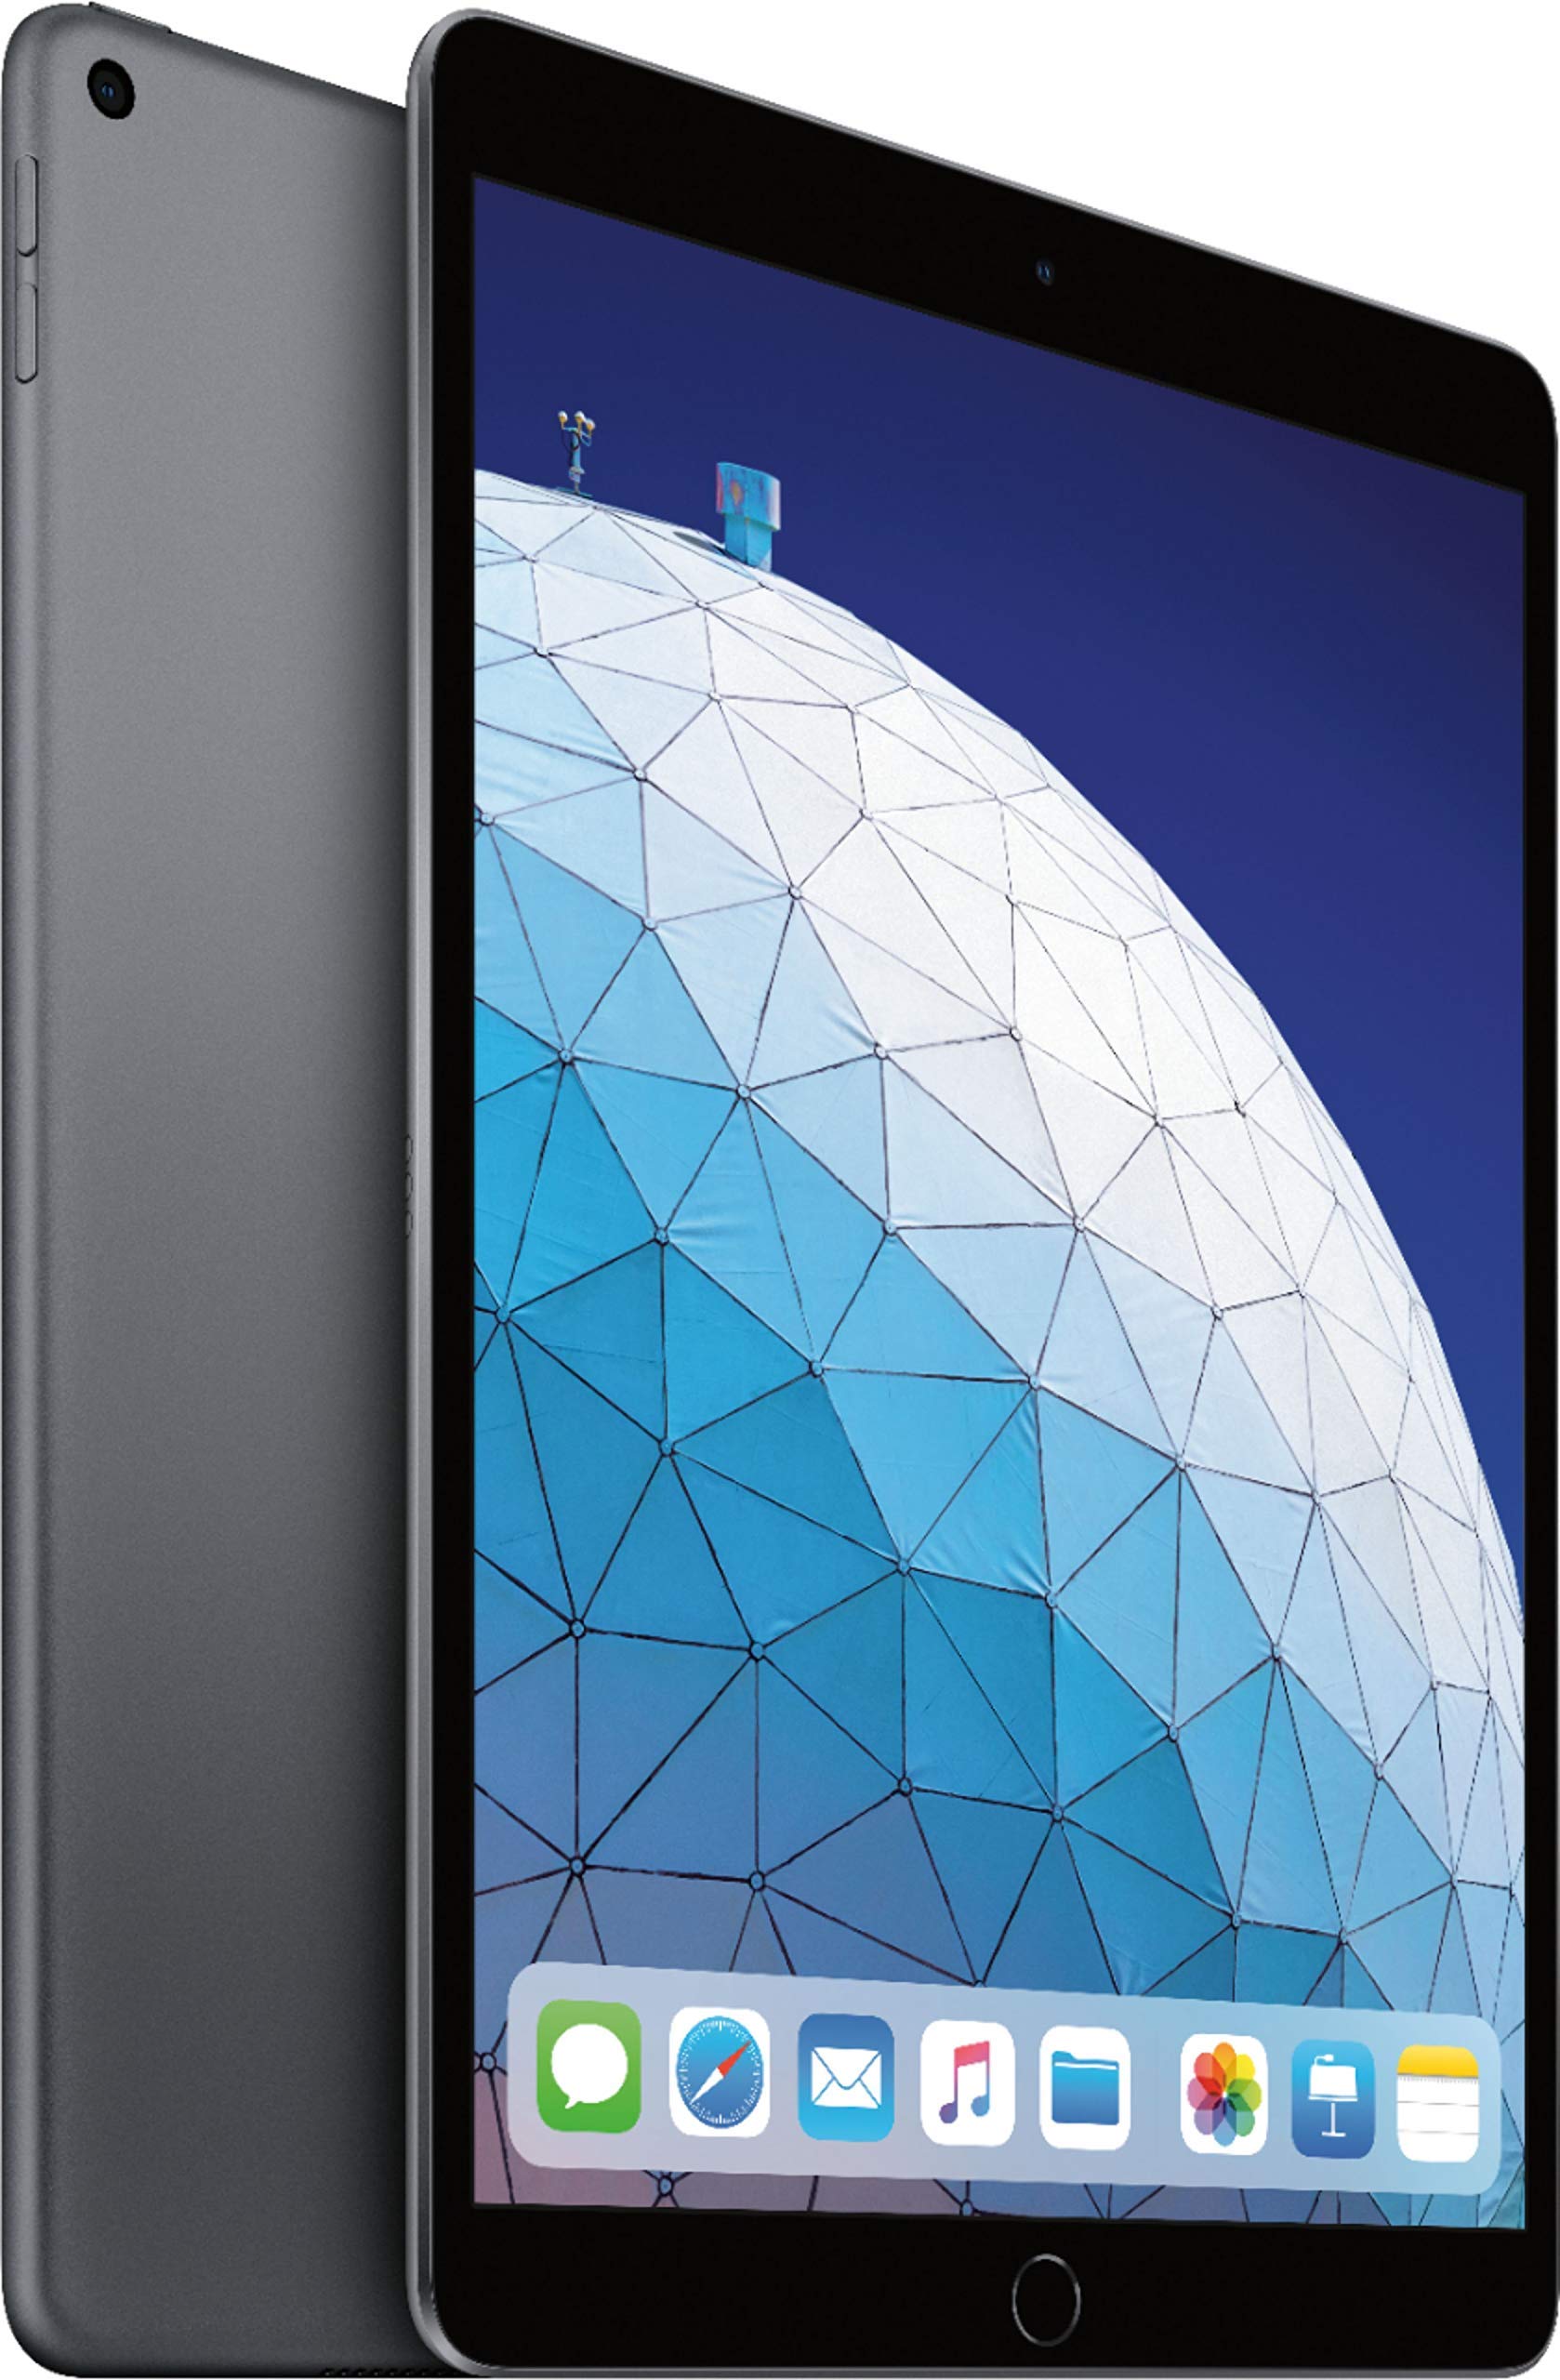 Apple iPad Air (10.5-inch, Wi-Fi + Cellular, 256GB) - Space Gray (Renewed)